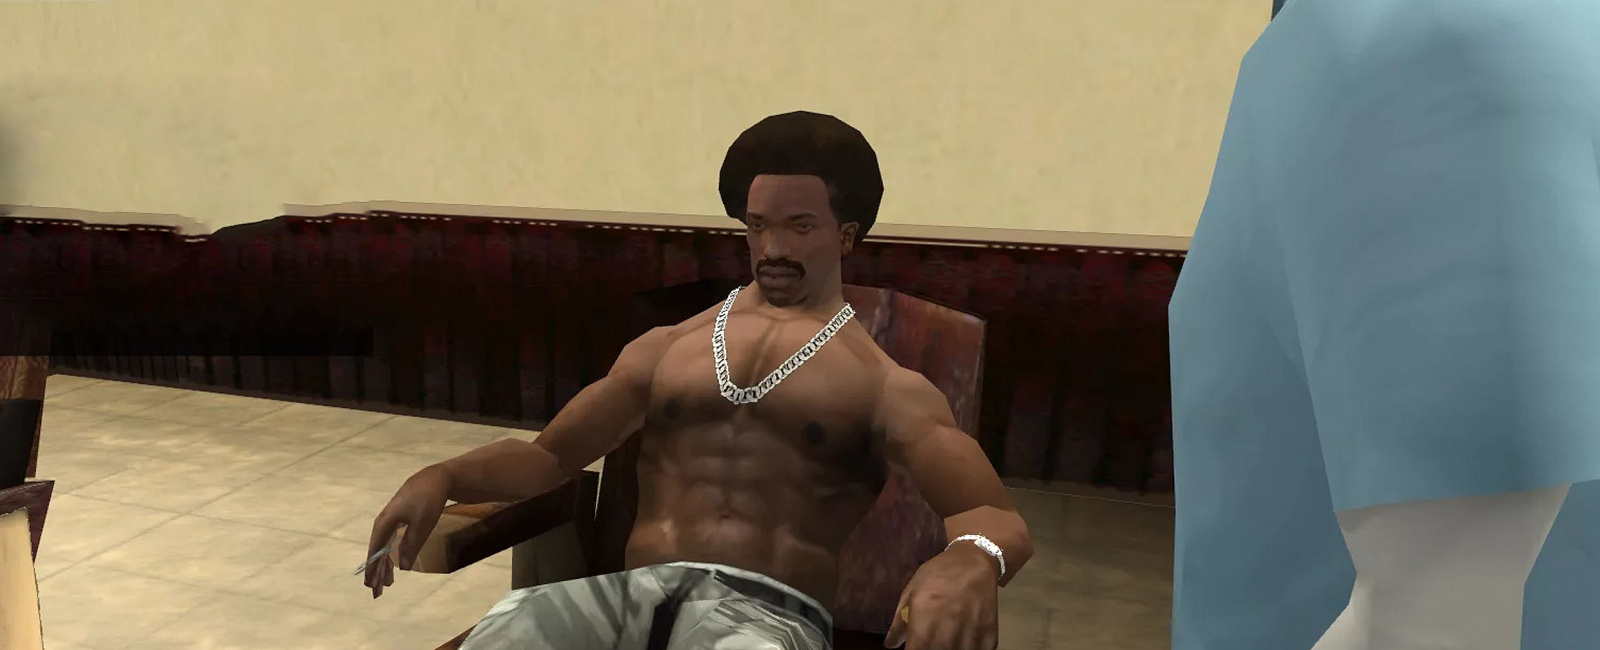 GTA San Andreas: barbearia faz comercial inspirado no jogo